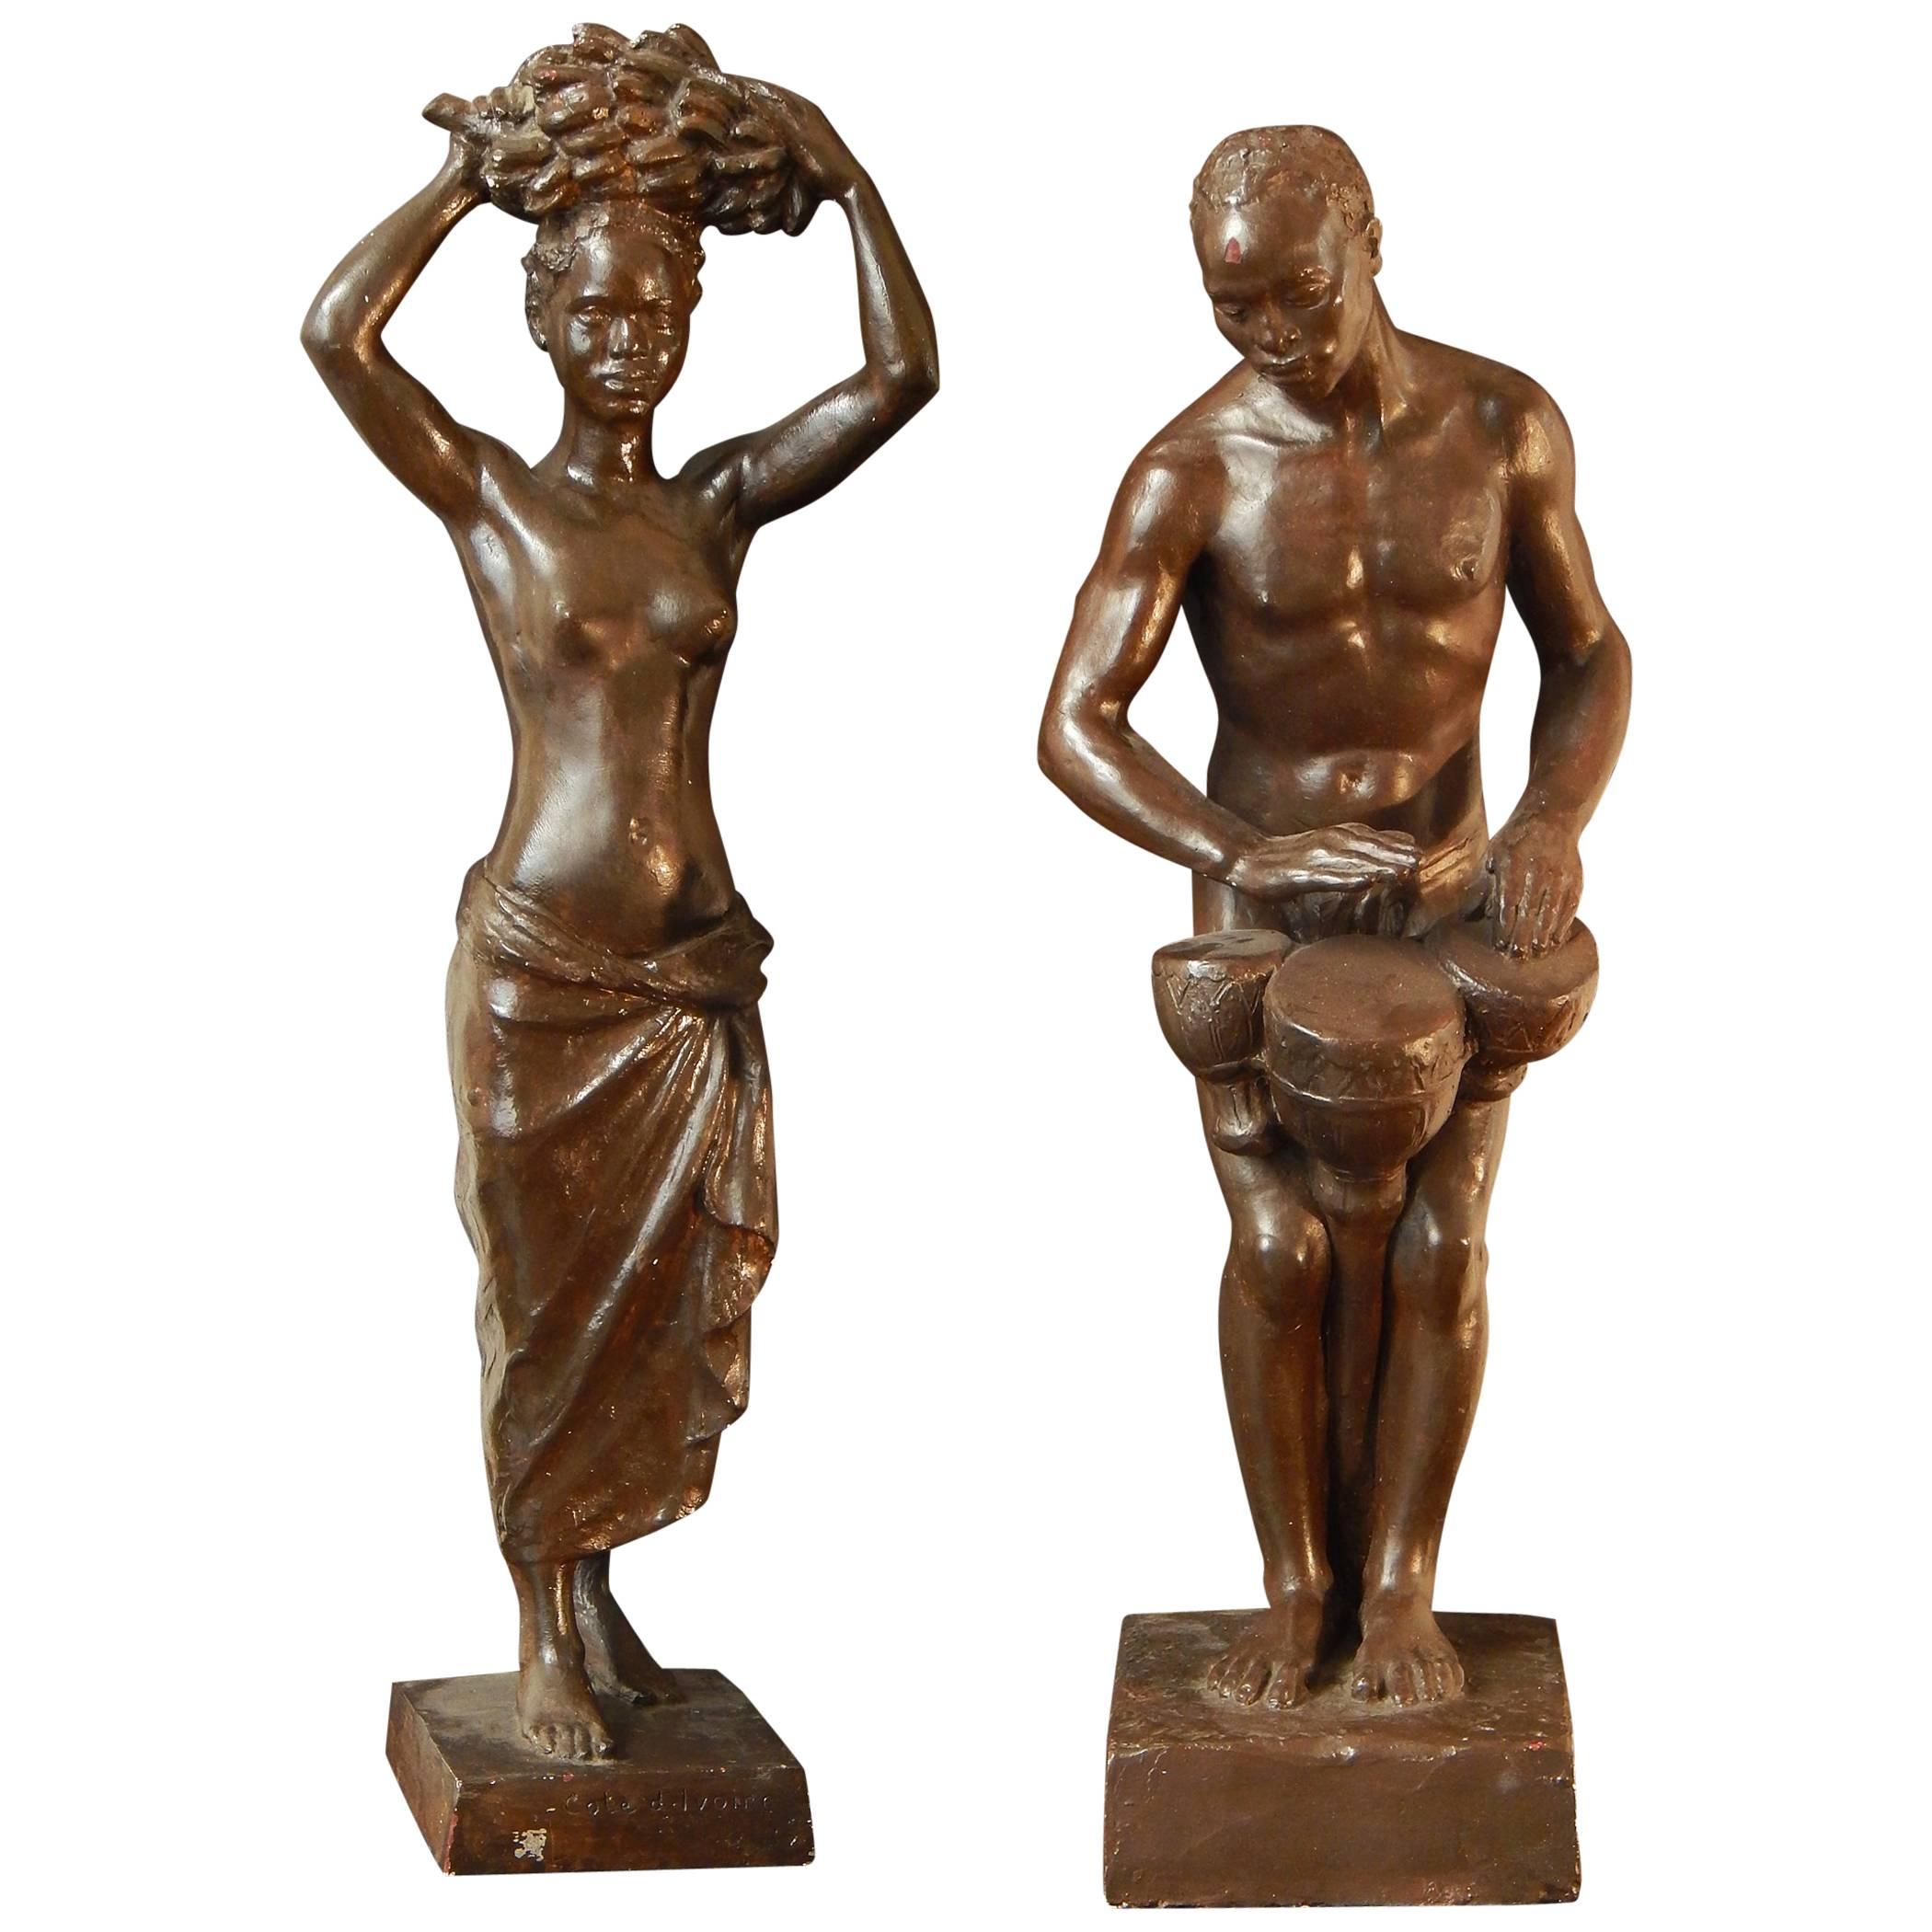 "Ivory Coast Figures", Important Art Deco Sculptures for Eugène Printz Interior